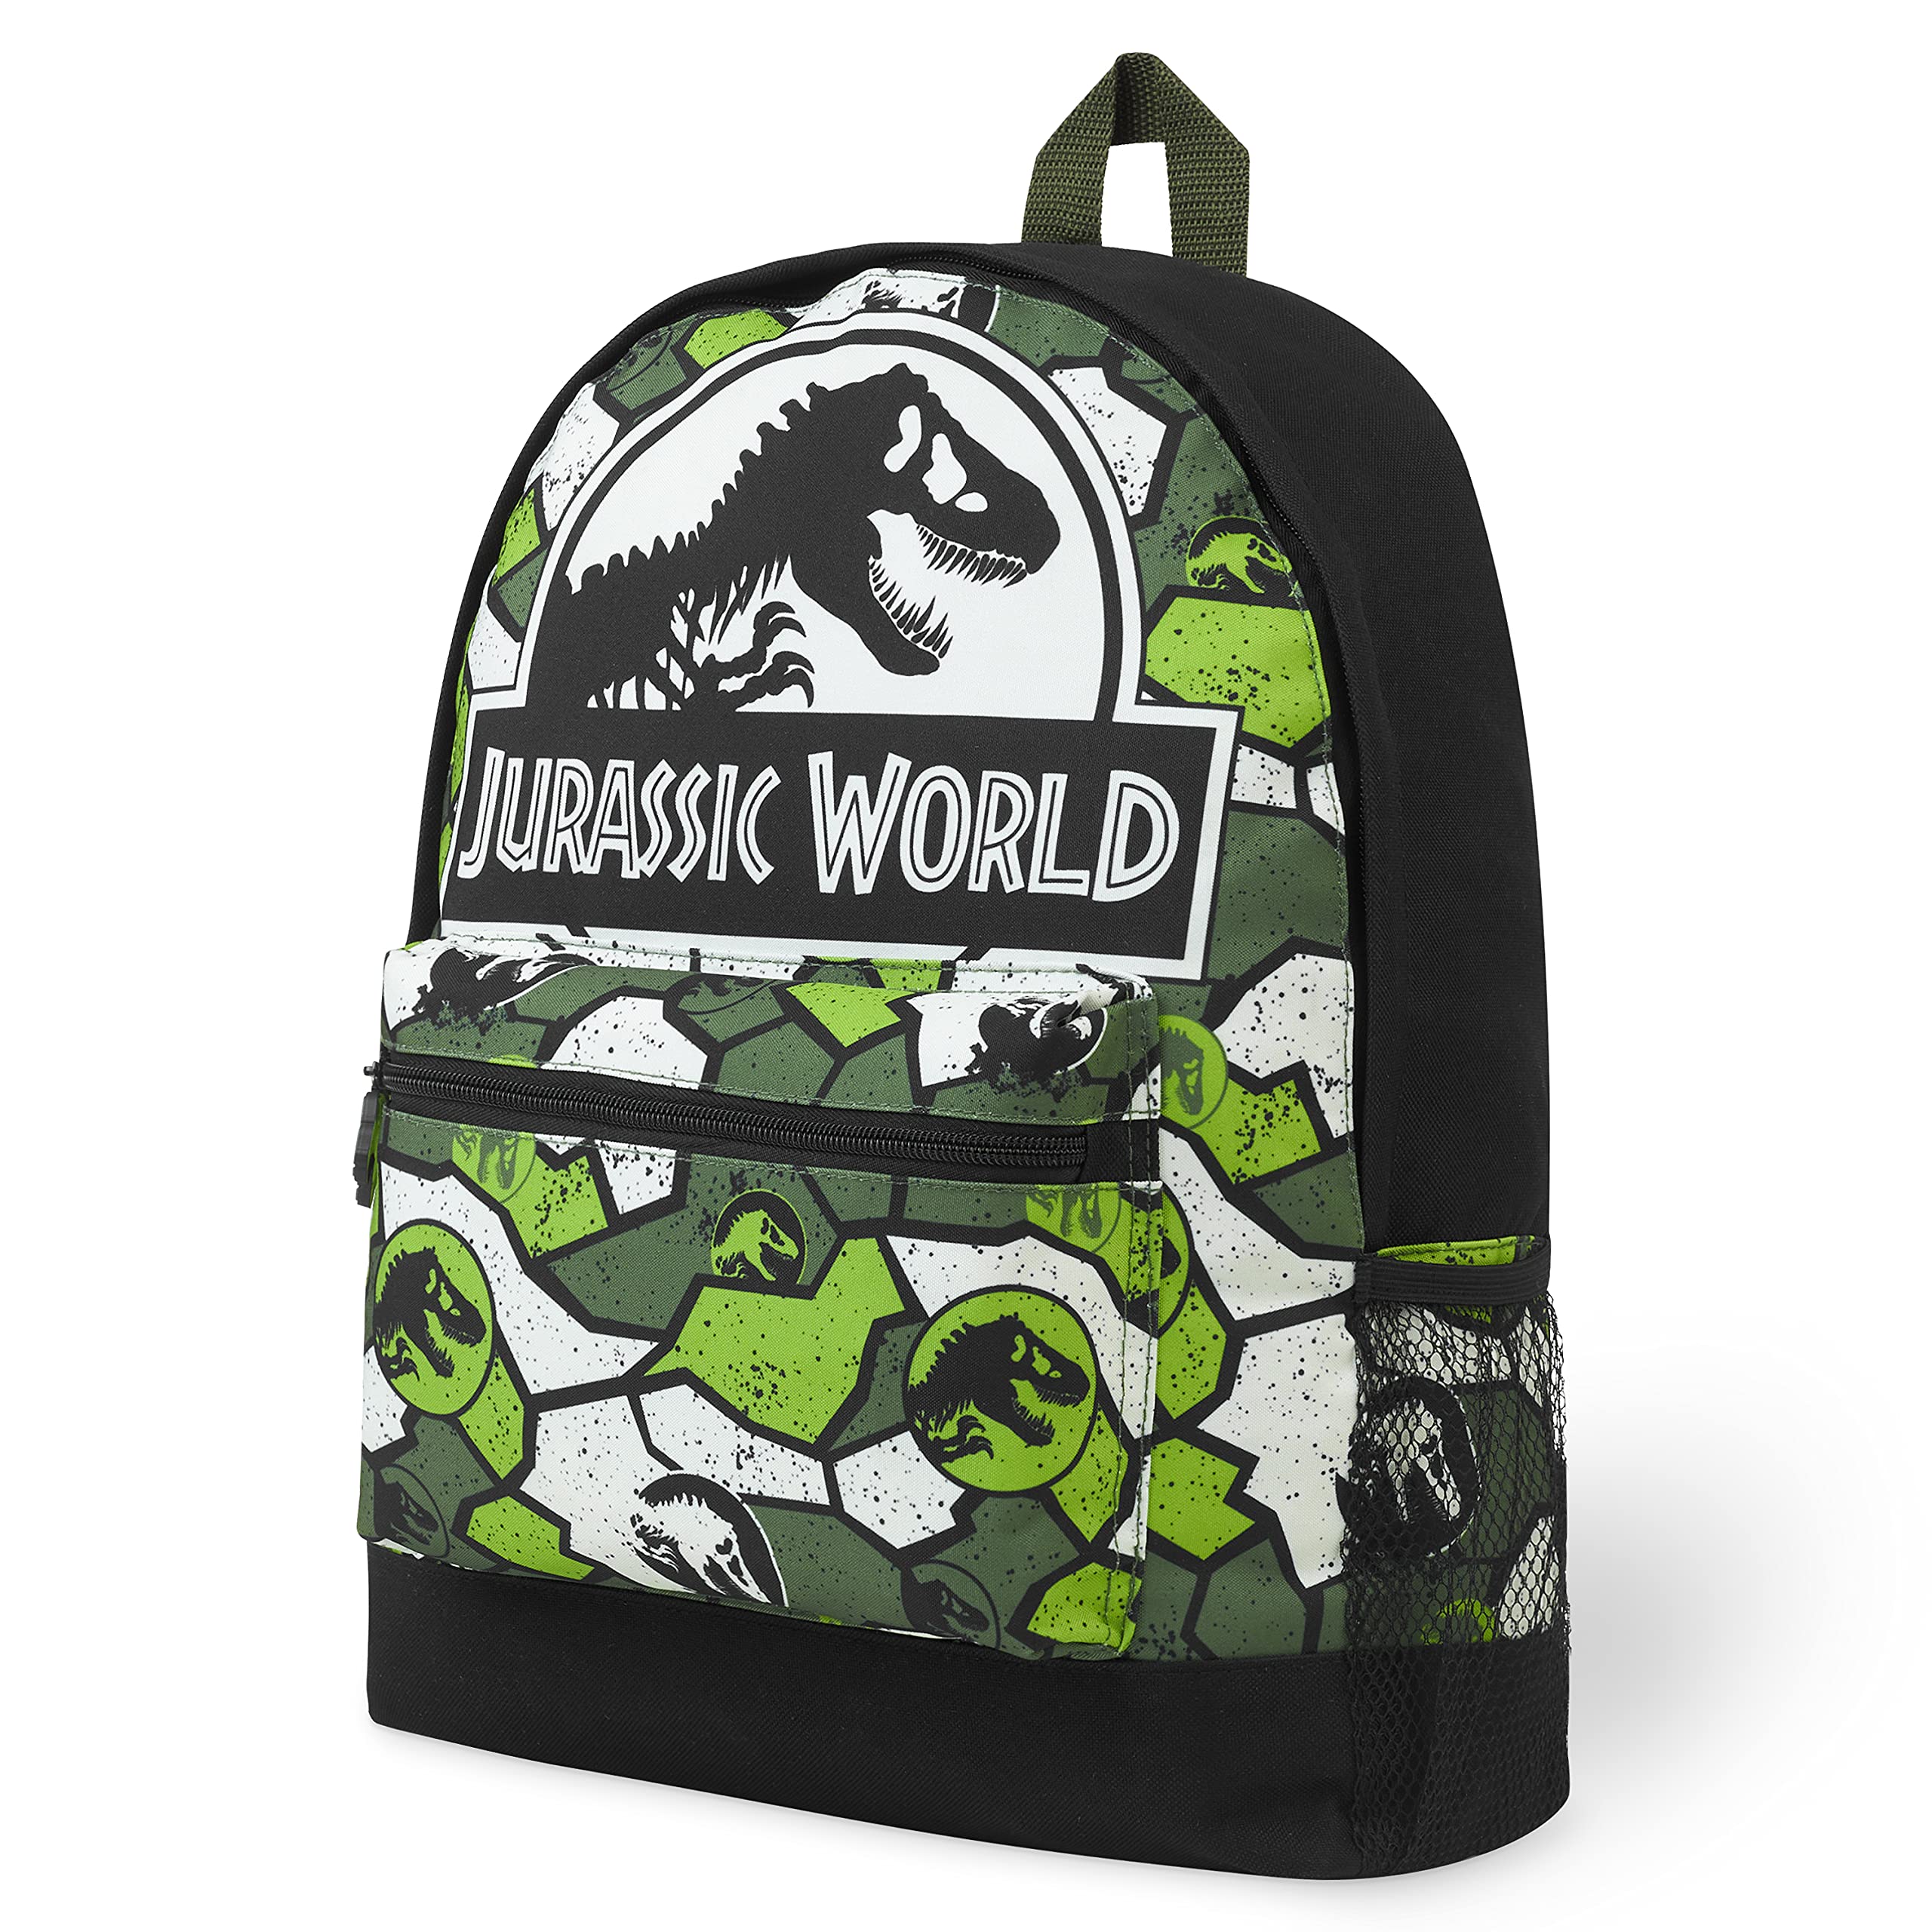 Jurassic World School Bag, Jurassic Park Kids Backpack With Camouflage Print, Indominus Rex Rucksack Backpack For School Travel, Dinosaur Gifts For Boys Girls Teens